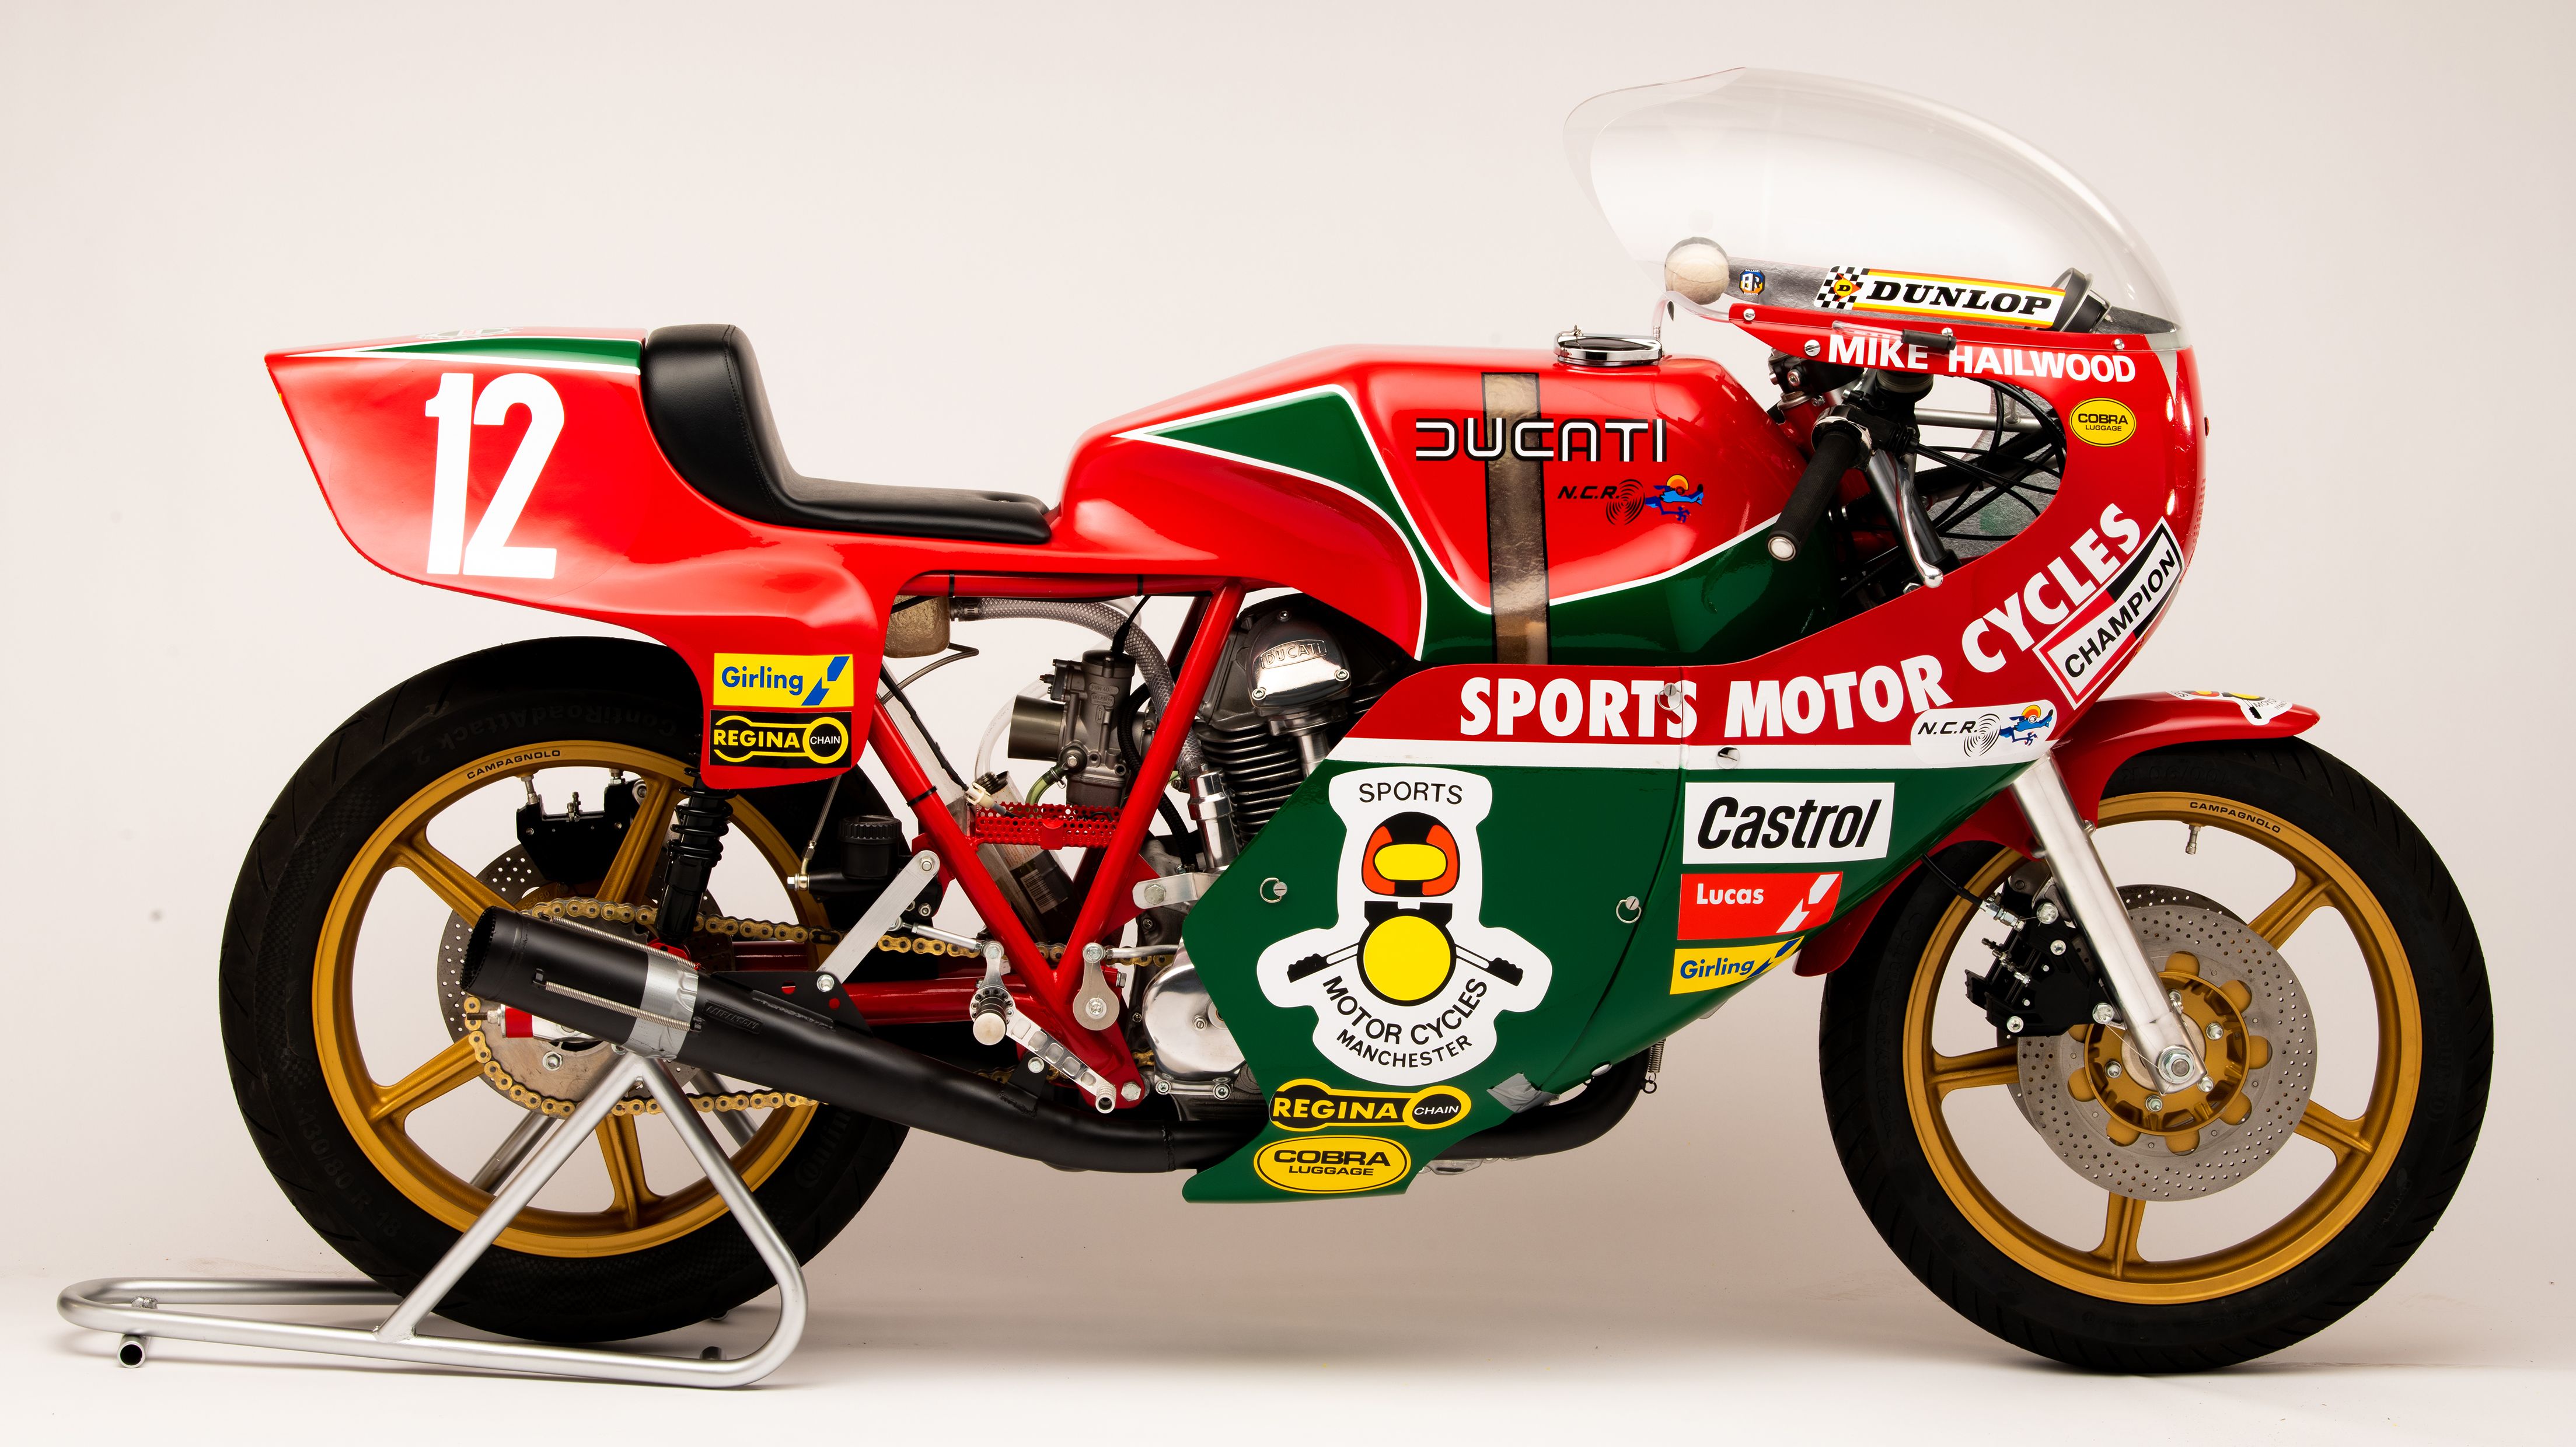 Ducati MHR Replica photoshoot